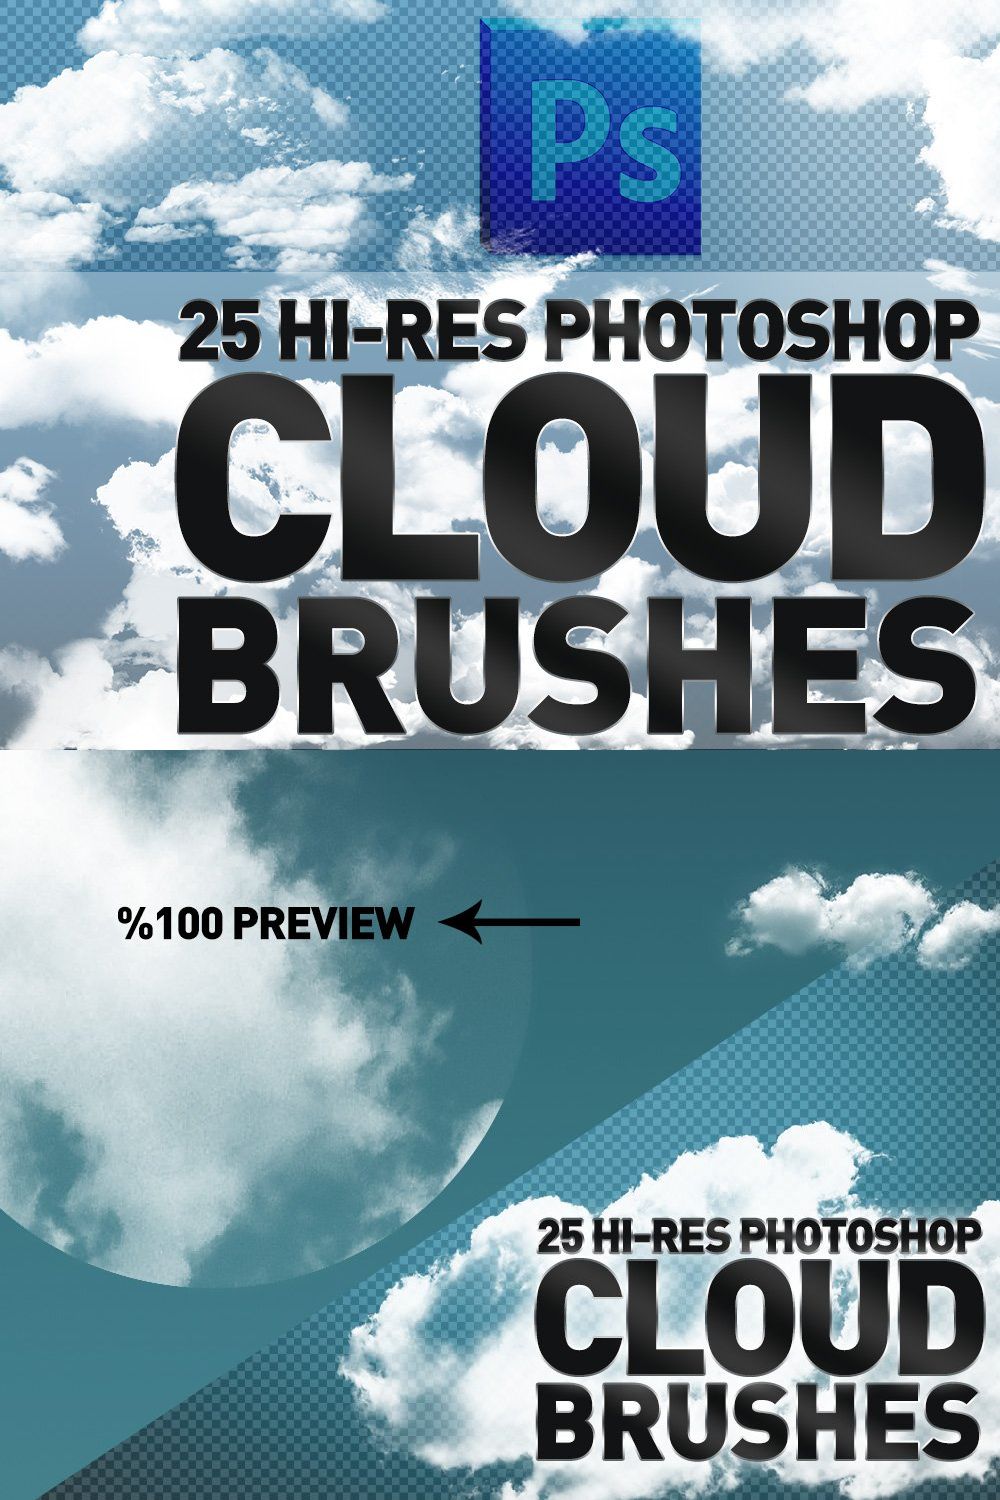 25 Hi-Res Cloud Brushes pinterest preview image.